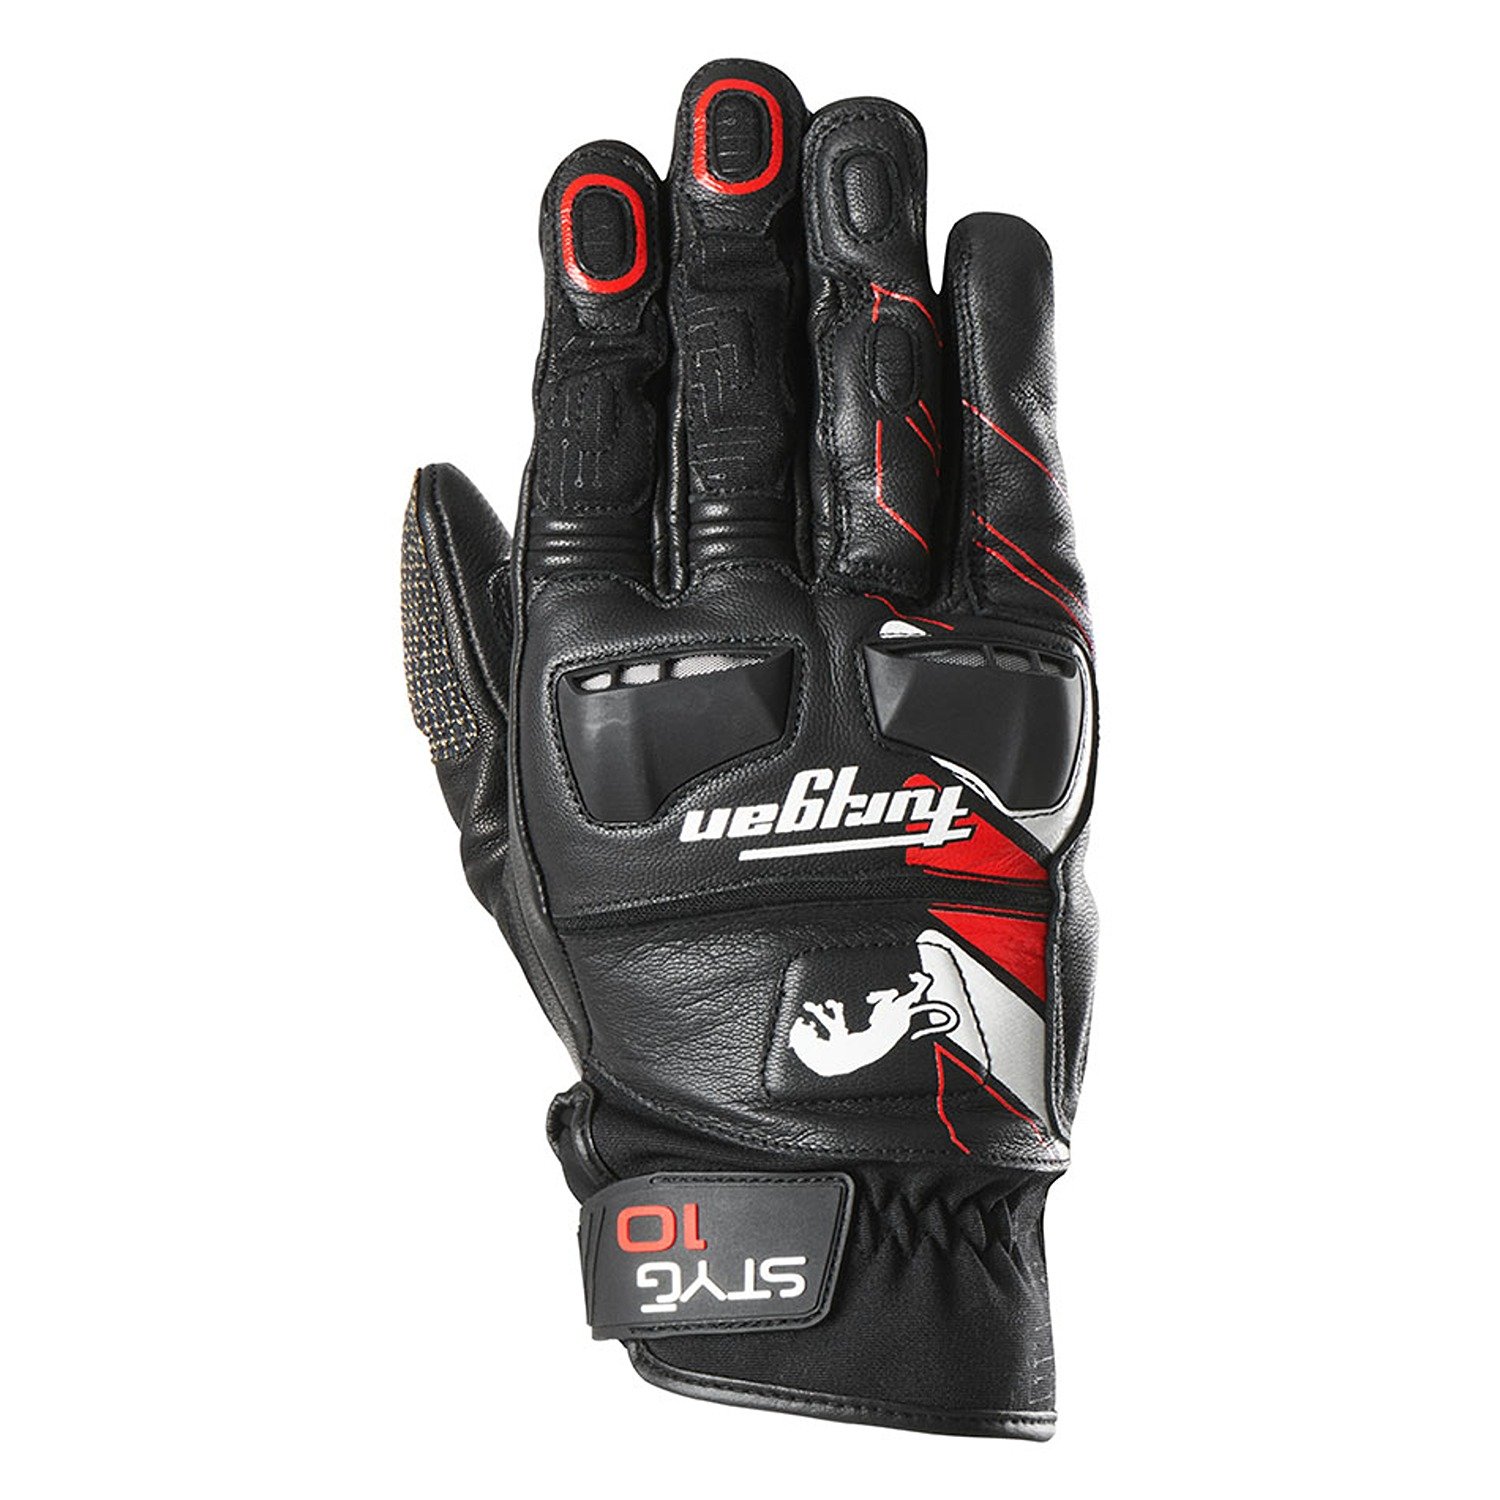 Image of Furygan Styg10 Gloves Black White Red Size XL ID 3435980385057